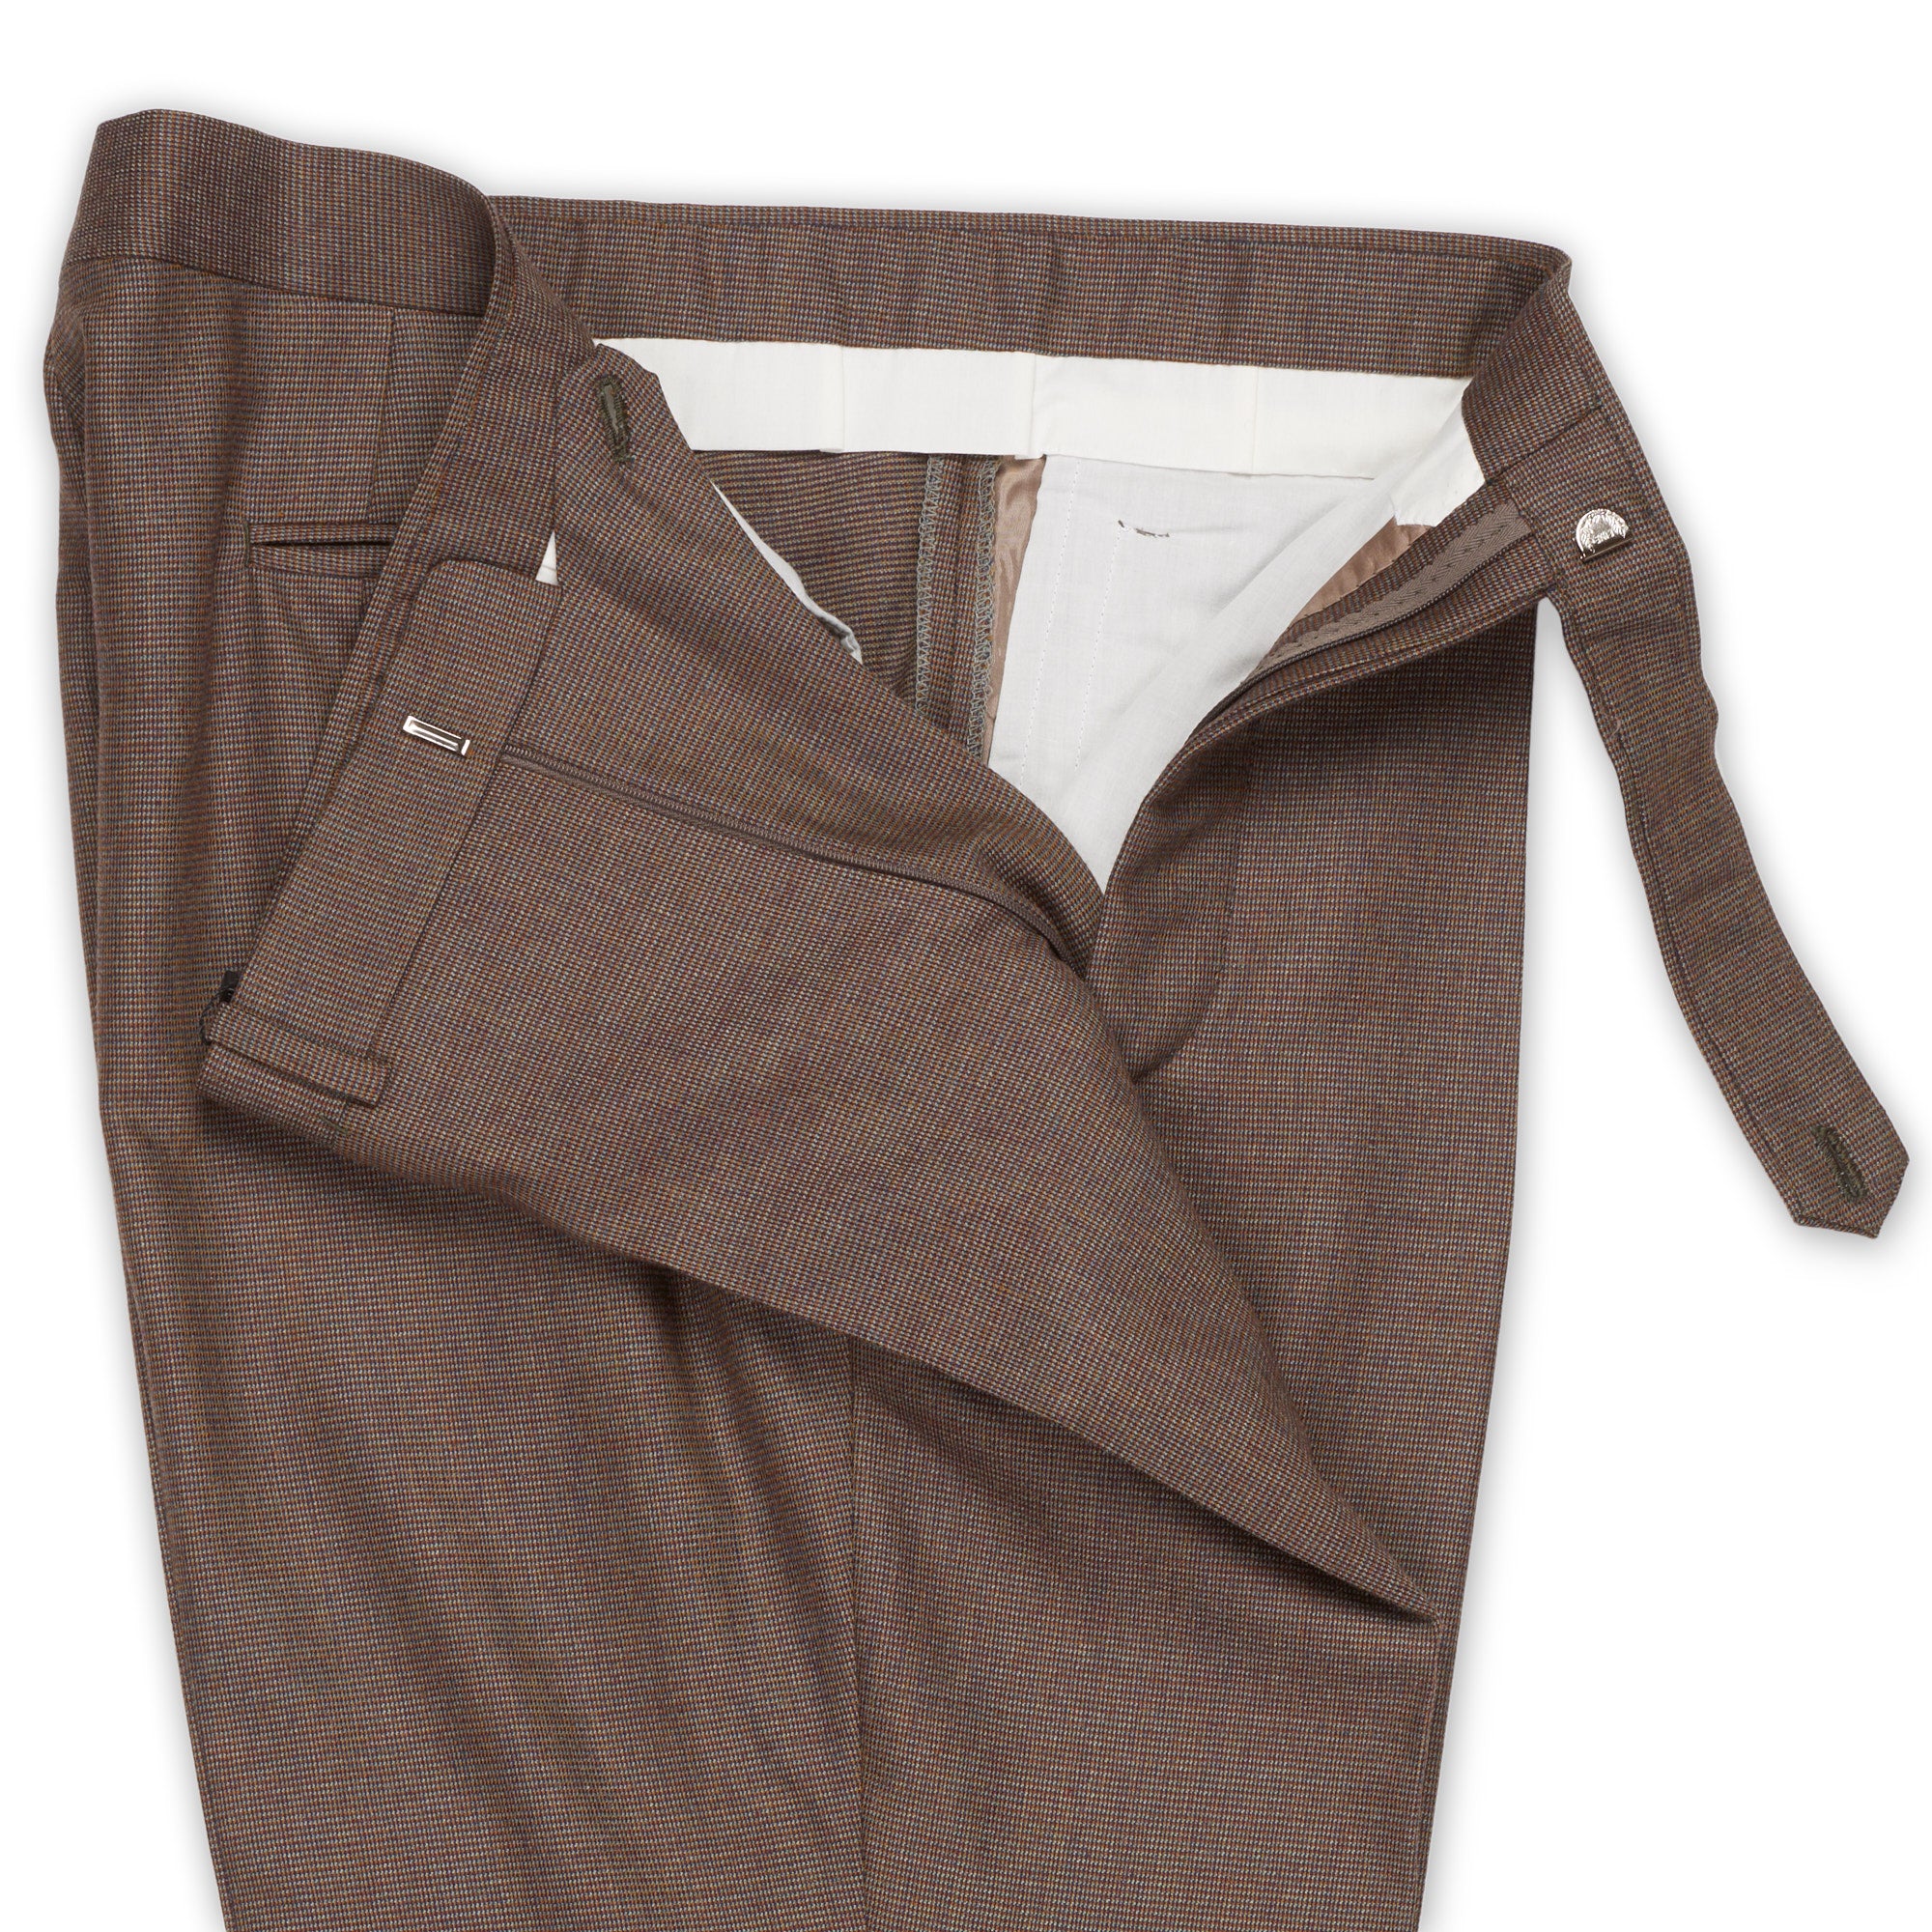 BESPOKE ATHENS Handmade Brown Wool Flat Front Dress Pants EU 56 NEW US 40 BESPOKE ATHENS